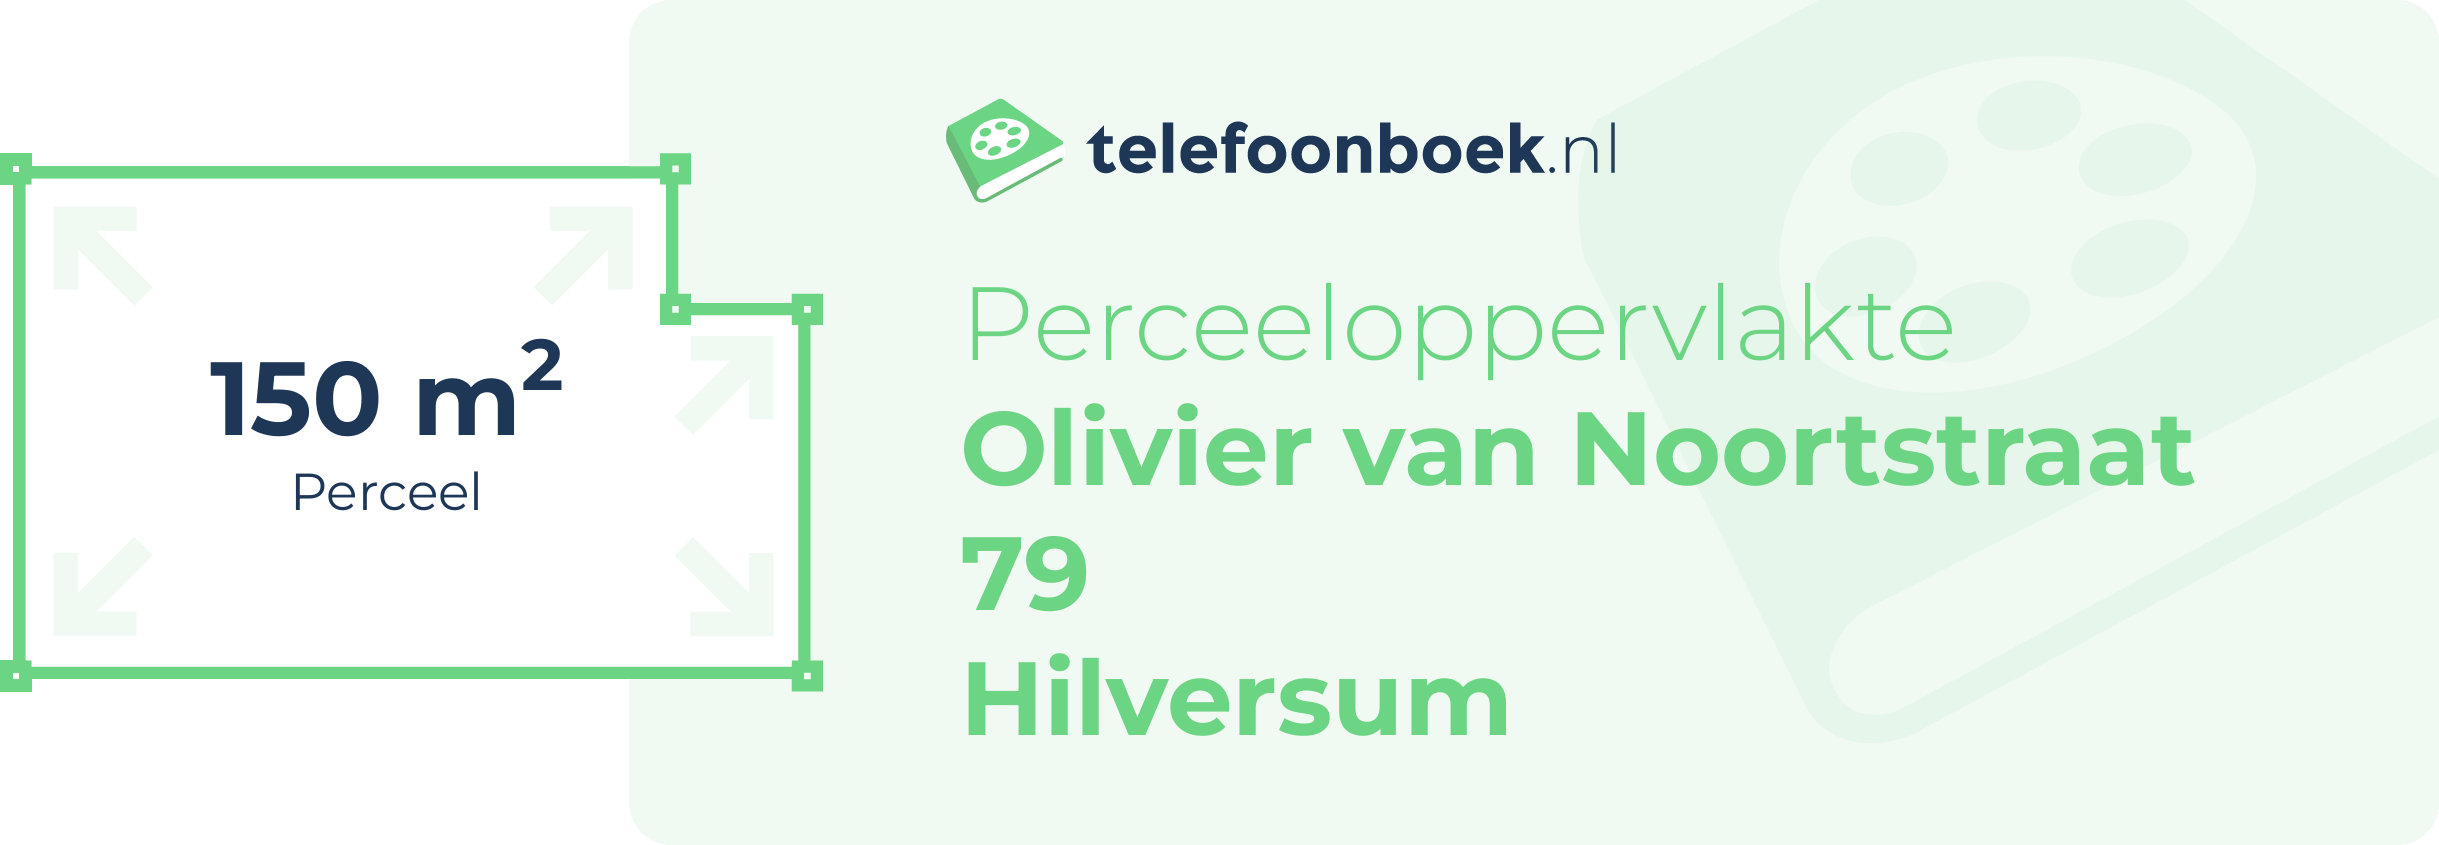 Perceeloppervlakte Olivier Van Noortstraat 79 Hilversum